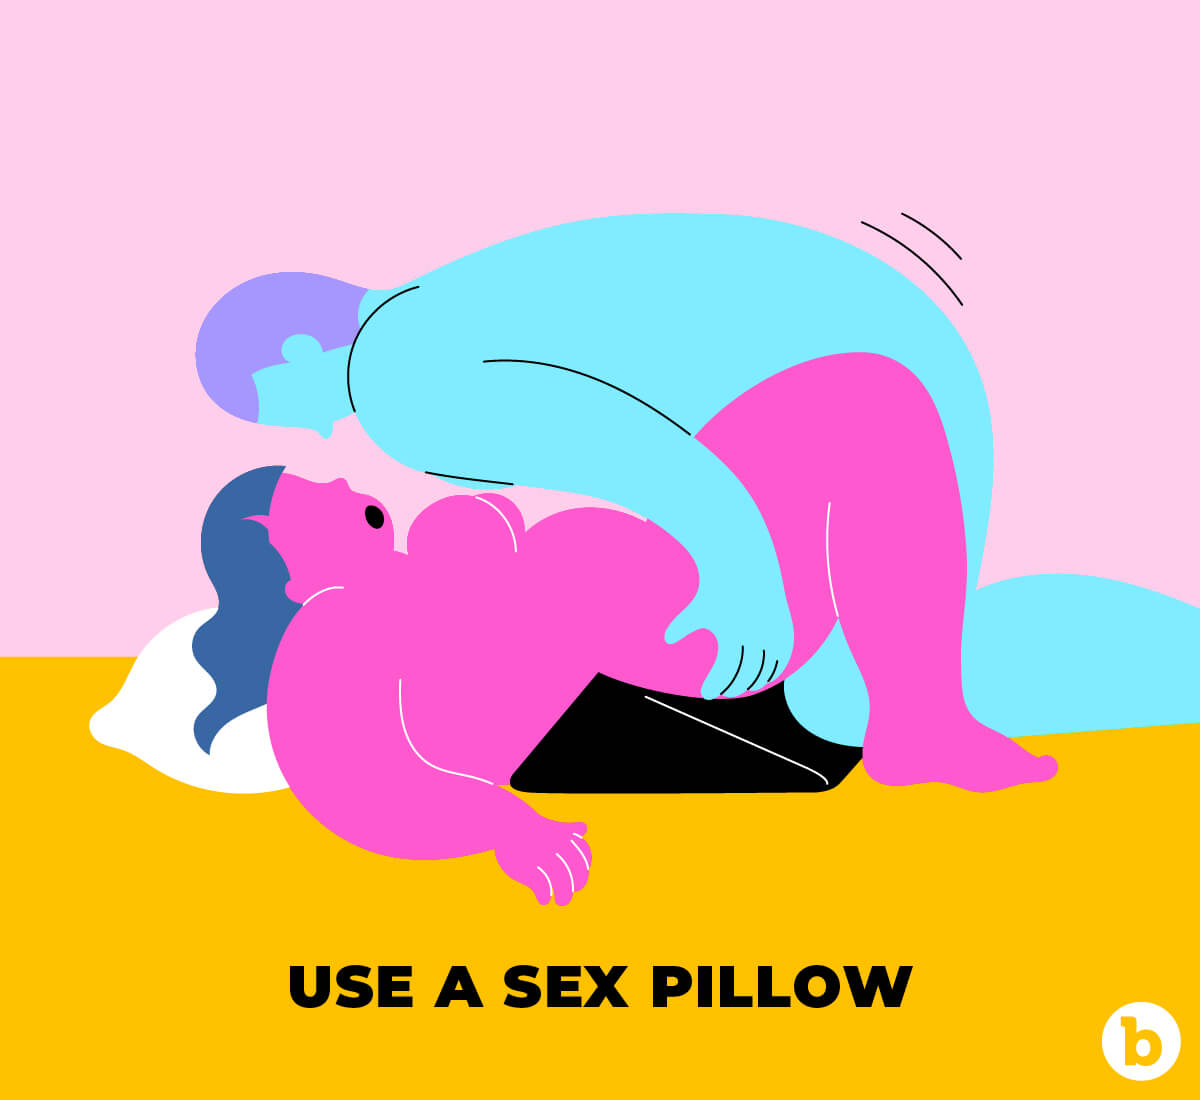 Using a sex pillow for anal sex allows easier access